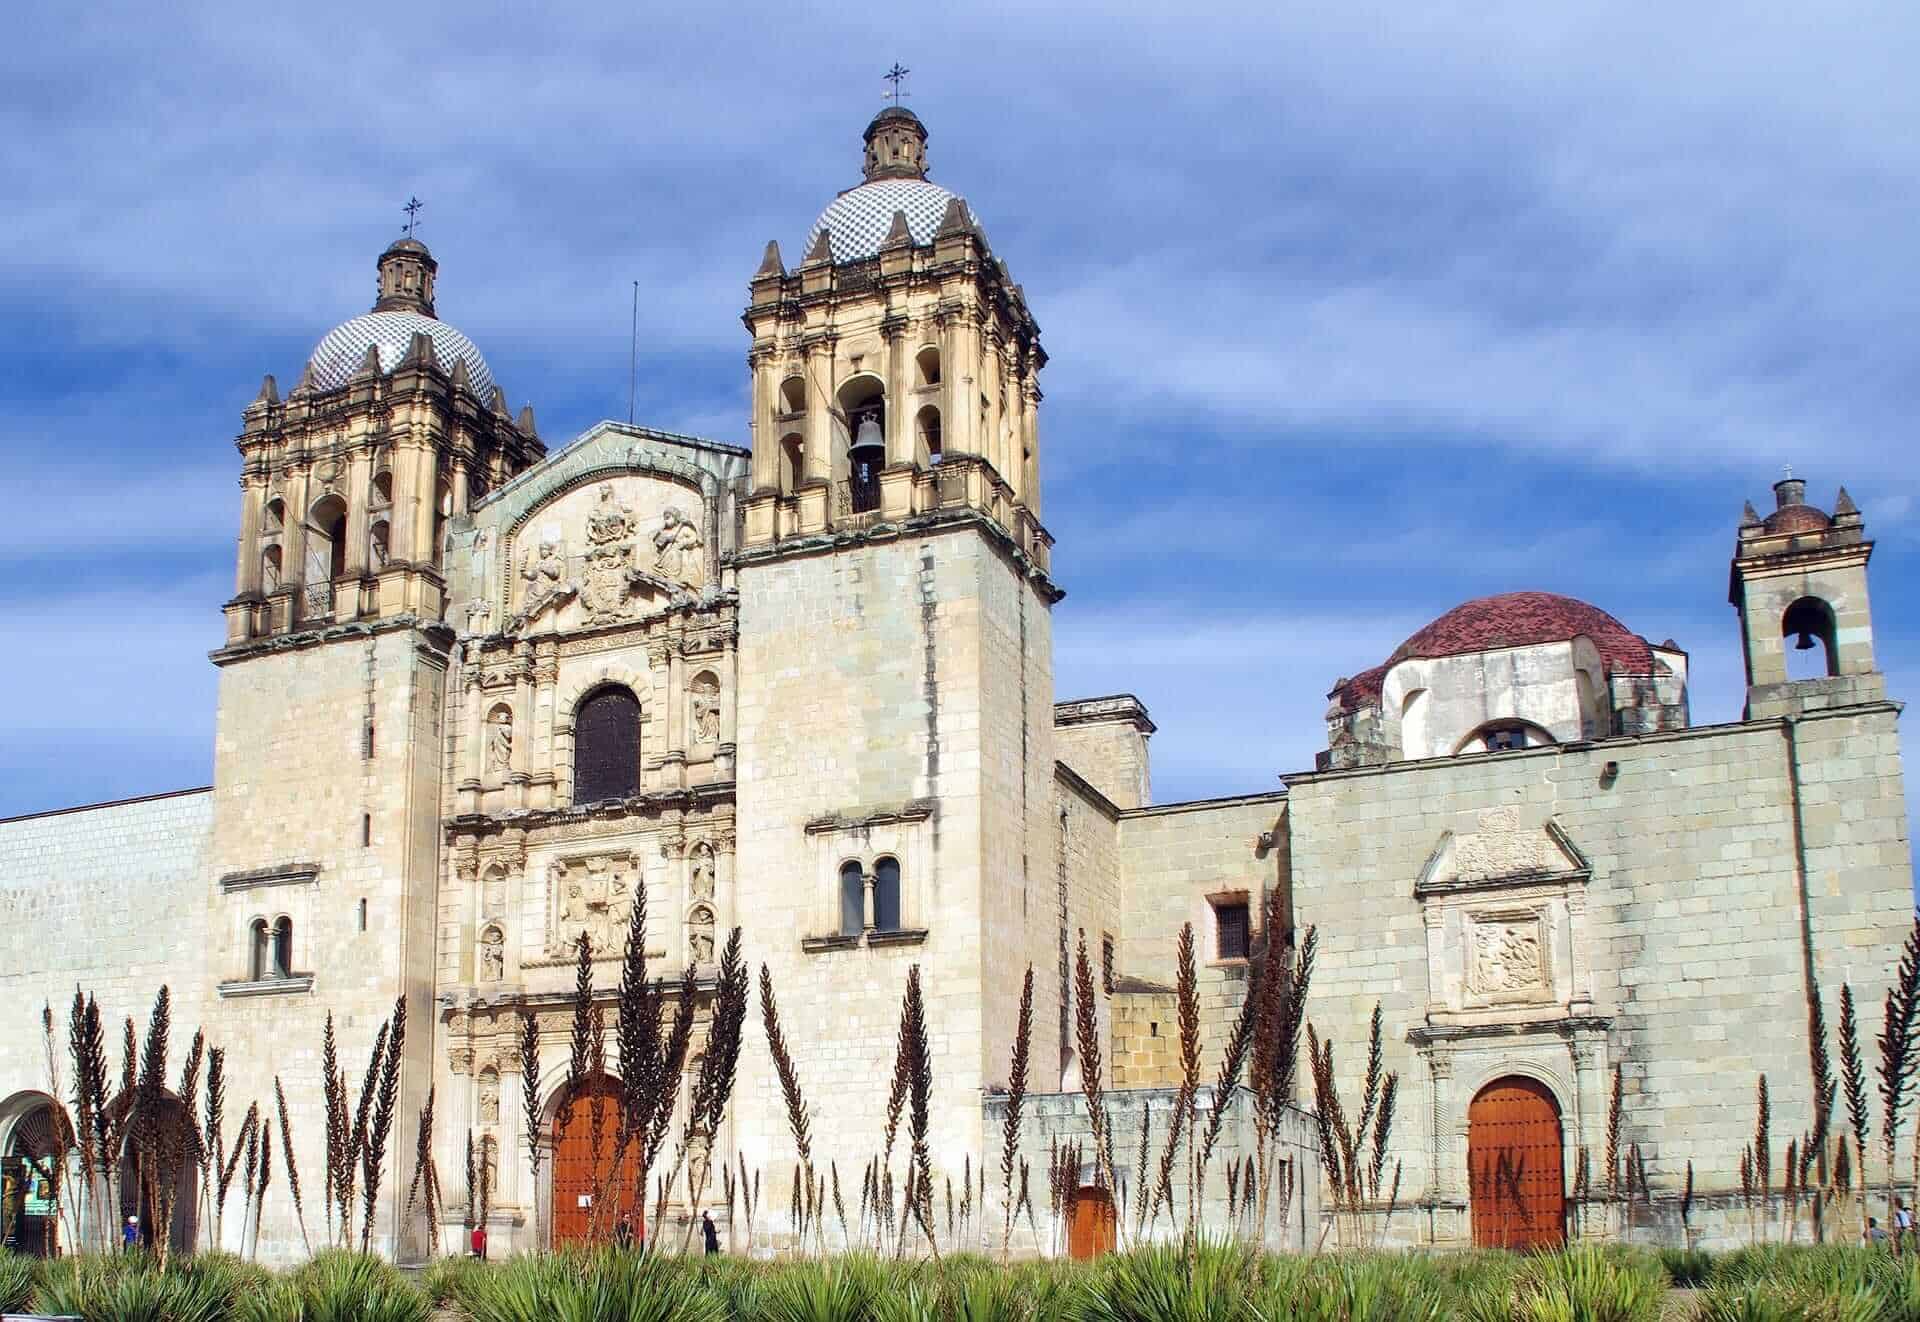 Church of Santo Domingo, Oaxaca